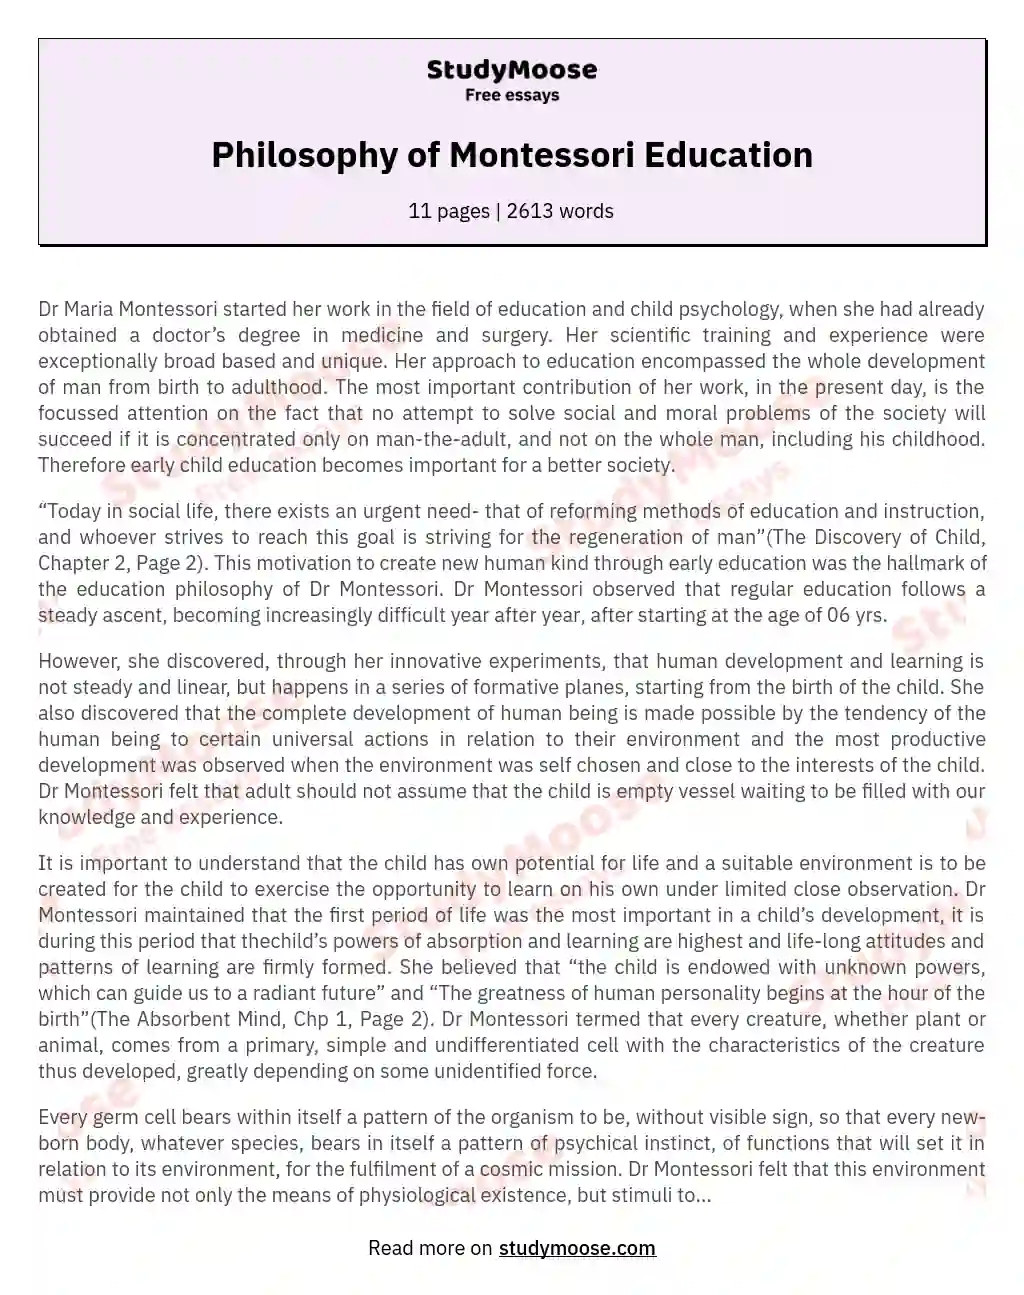 Philosophy of Montessori Education essay